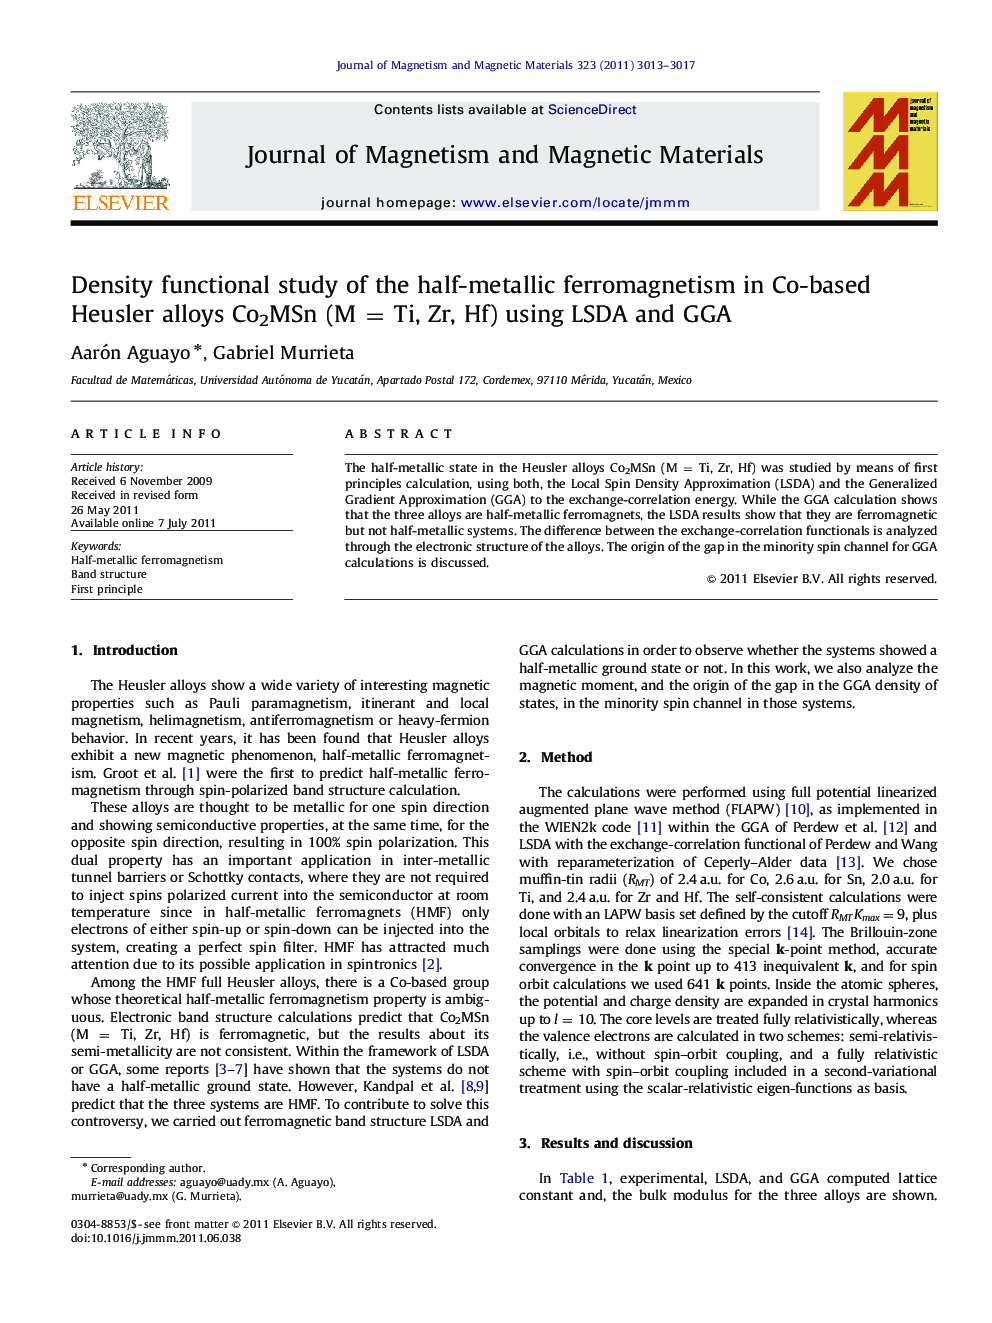 Density functional study of the half-metallic ferromagnetism in Co-based Heusler alloys Co2MSn (M = Ti, Zr, Hf) using LSDA and GGA